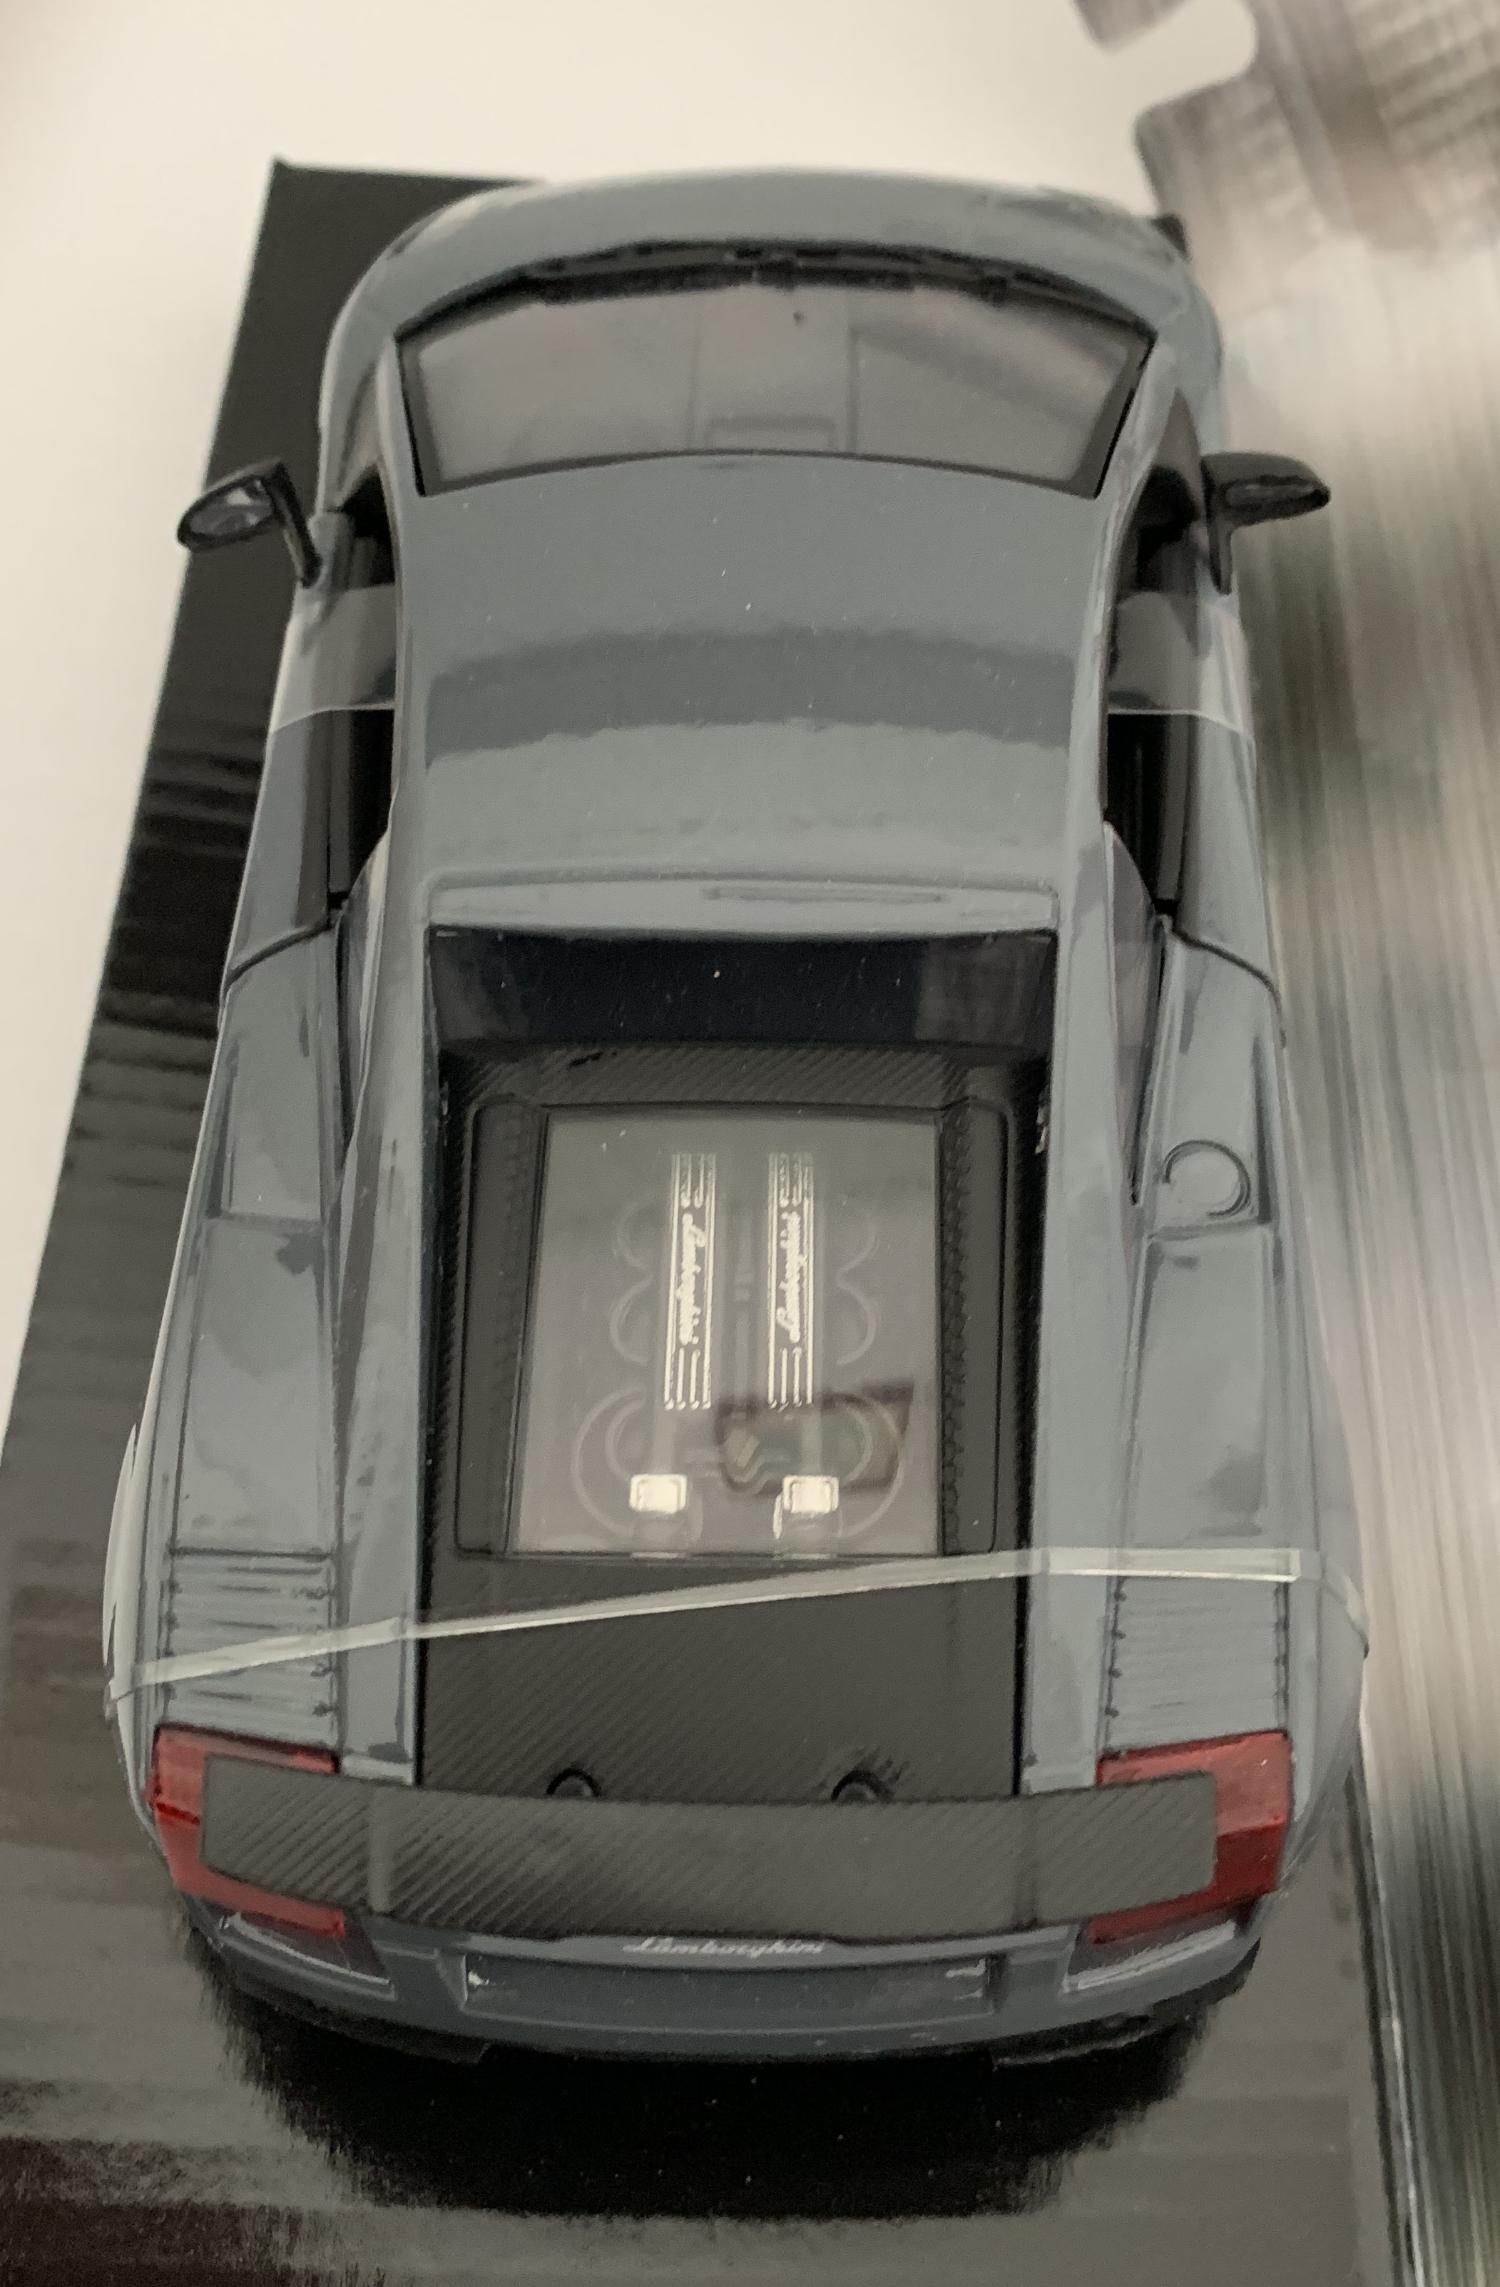 An excellent scale model of a Lamborghini Gallardo Superleggera decorated in grey with authentic graphics, rear spoiler